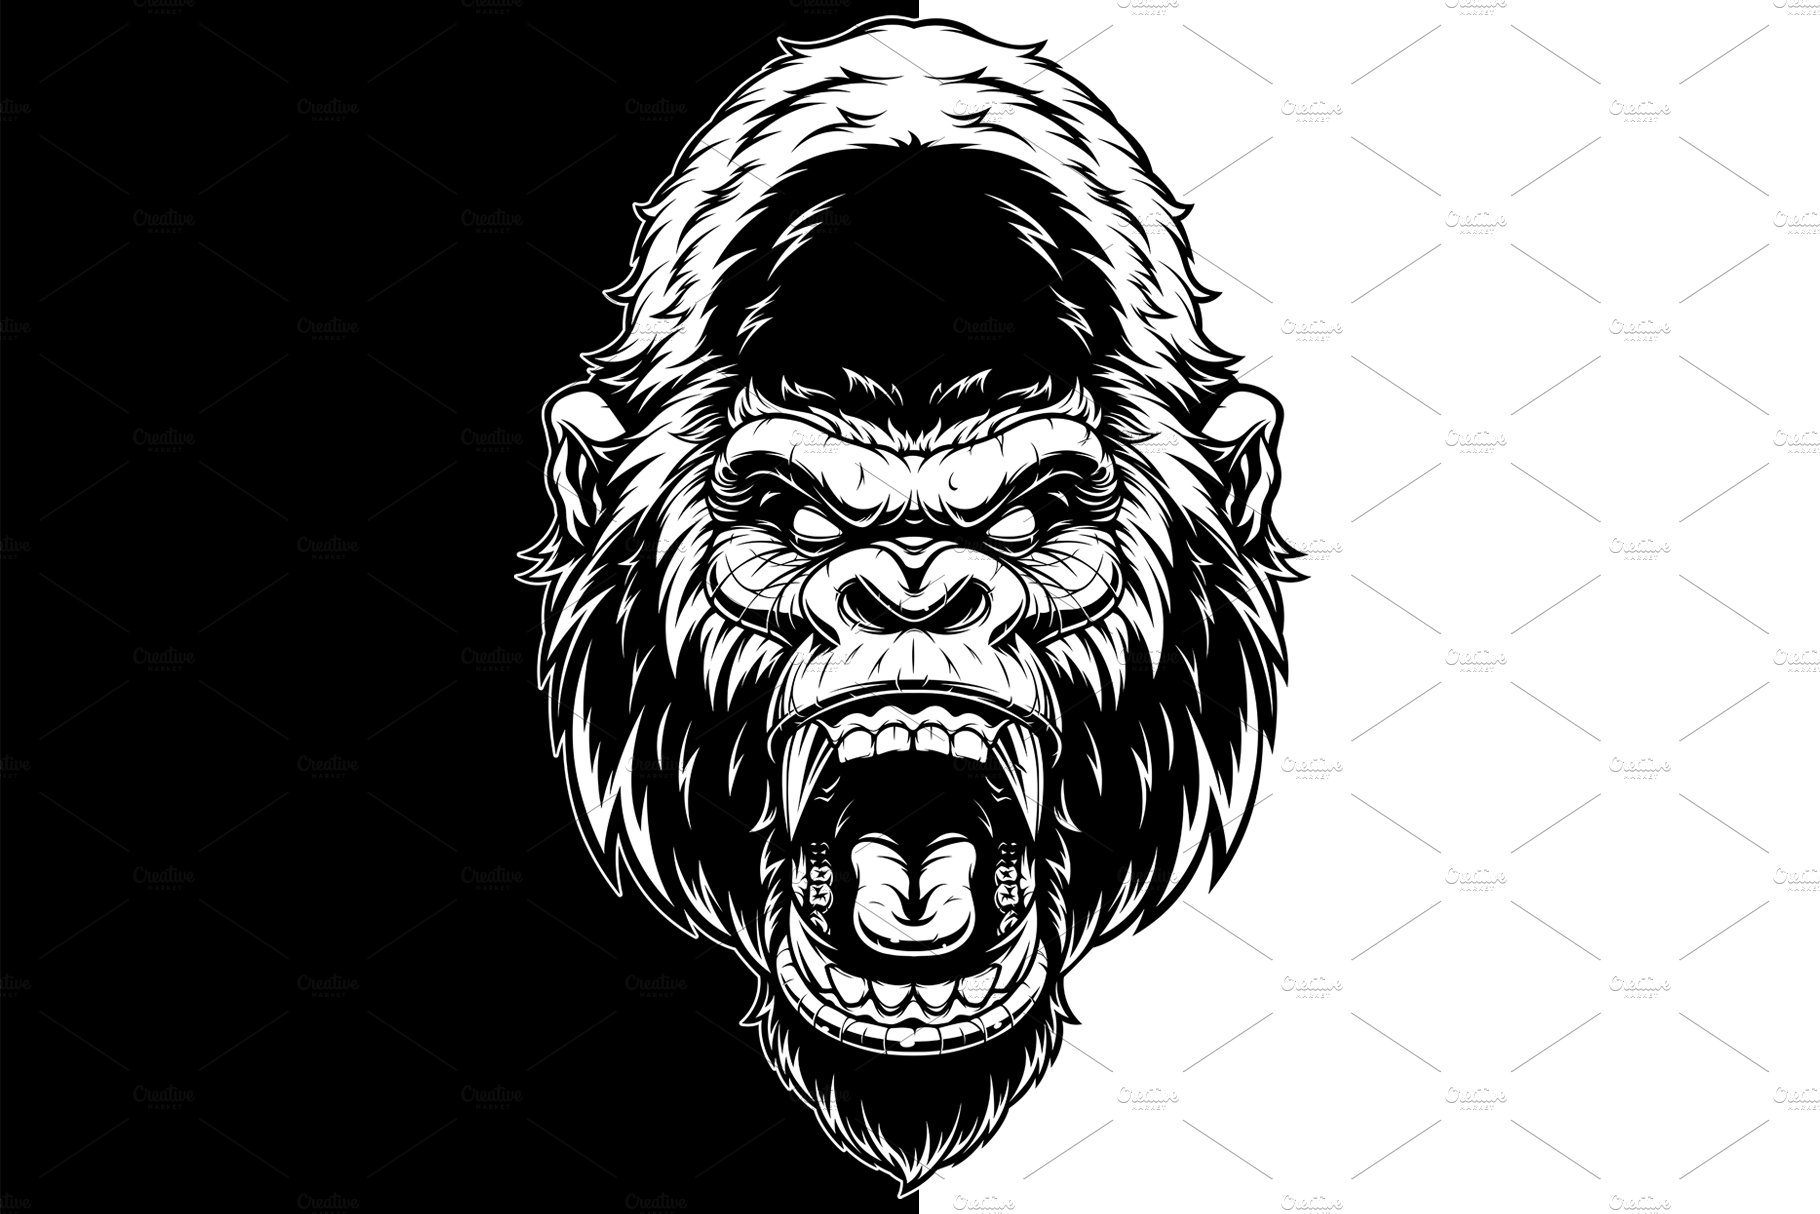 Ferocious gorilla head cover image.